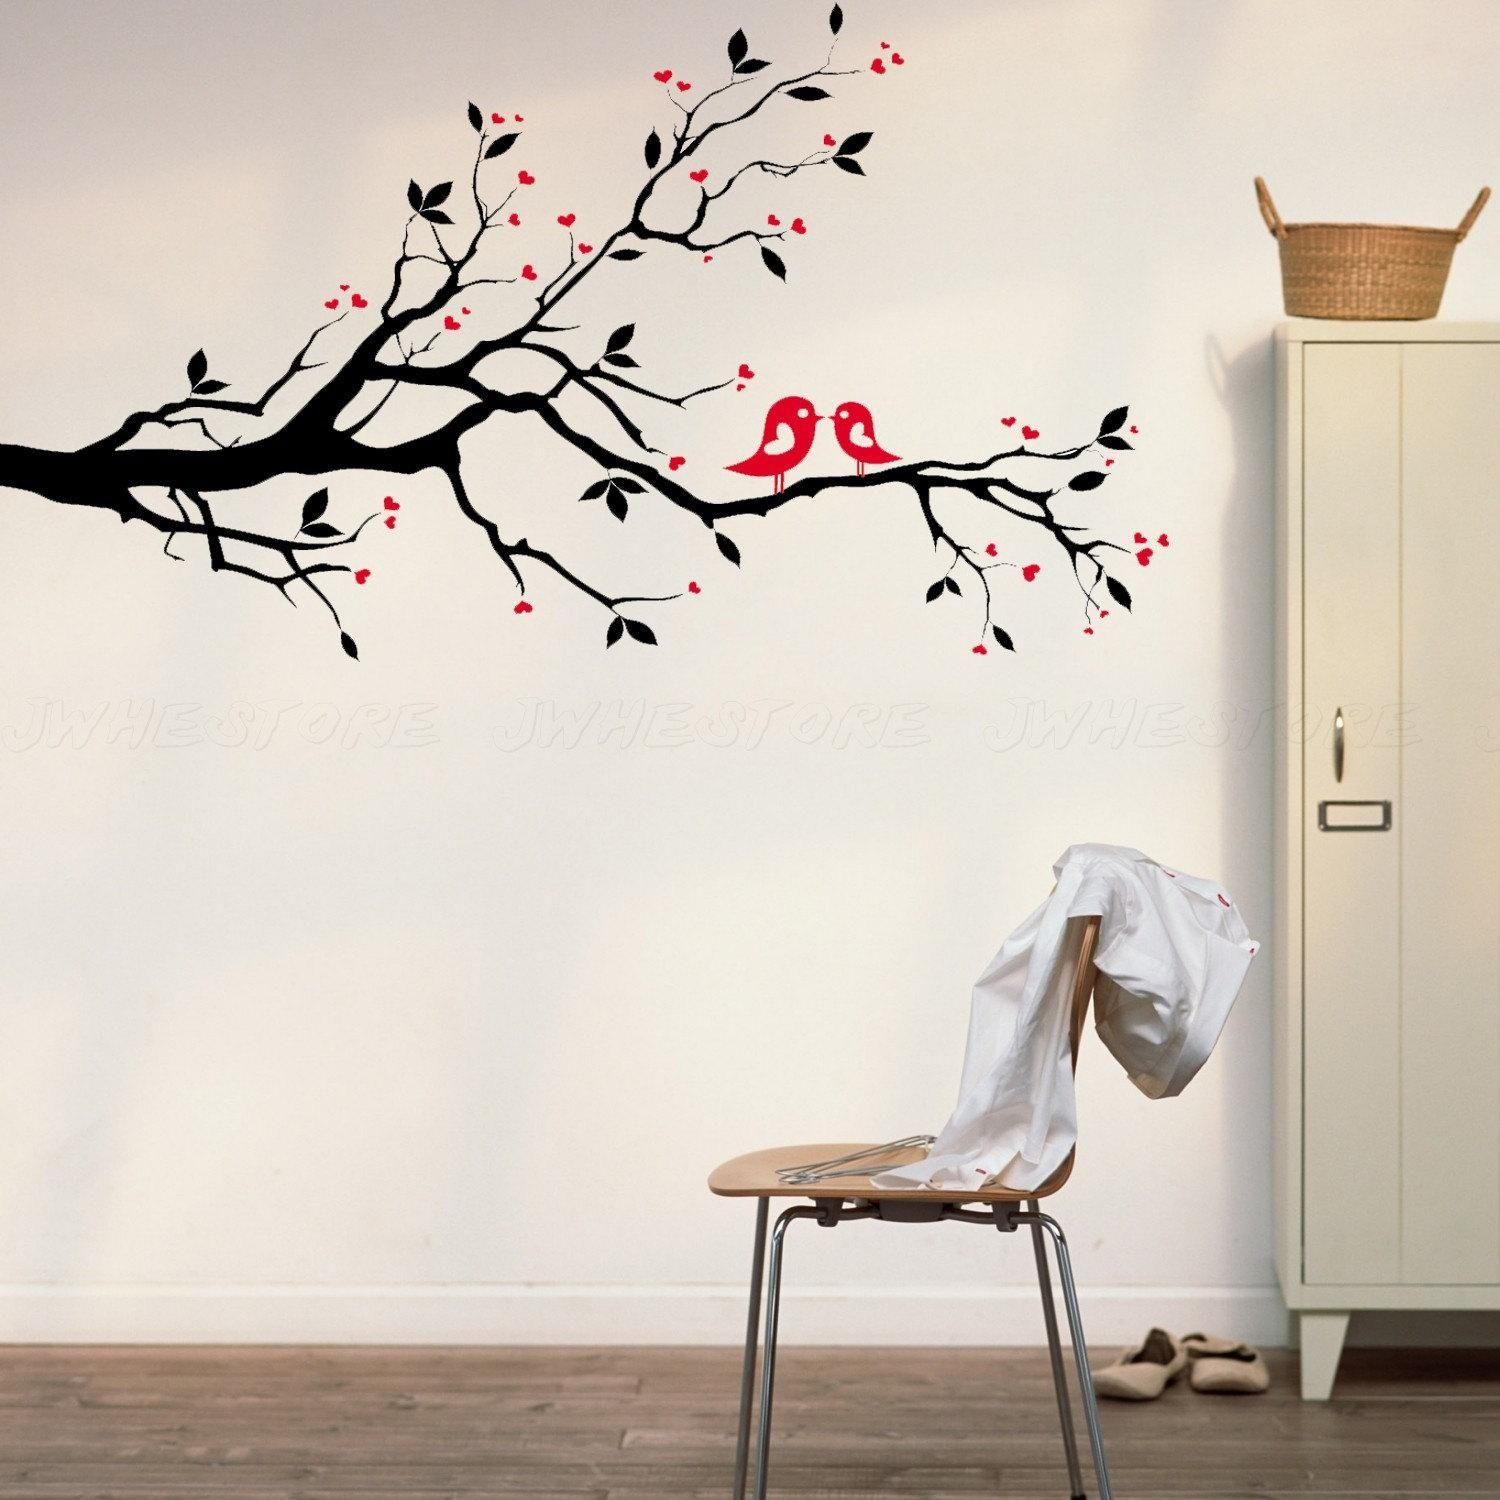 Kids Room. Wall Decal Ideas For Wall Decorations: Black Red Vinyl Regarding Oak Tree Vinyl Wall Art (Photo 1 of 20)